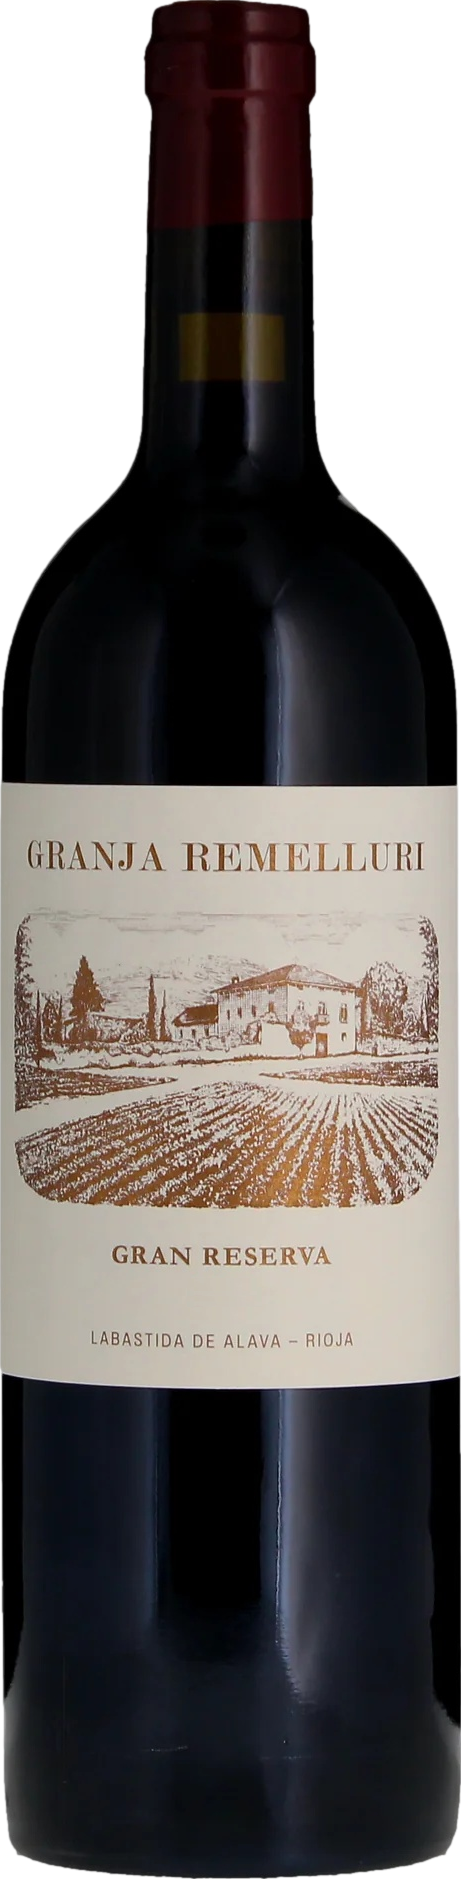 01.2012 günstig Kaufen-Remelluri Granja Gran Reserva Rioja 2012. Remelluri Granja Gran Reserva Rioja 2012 . 